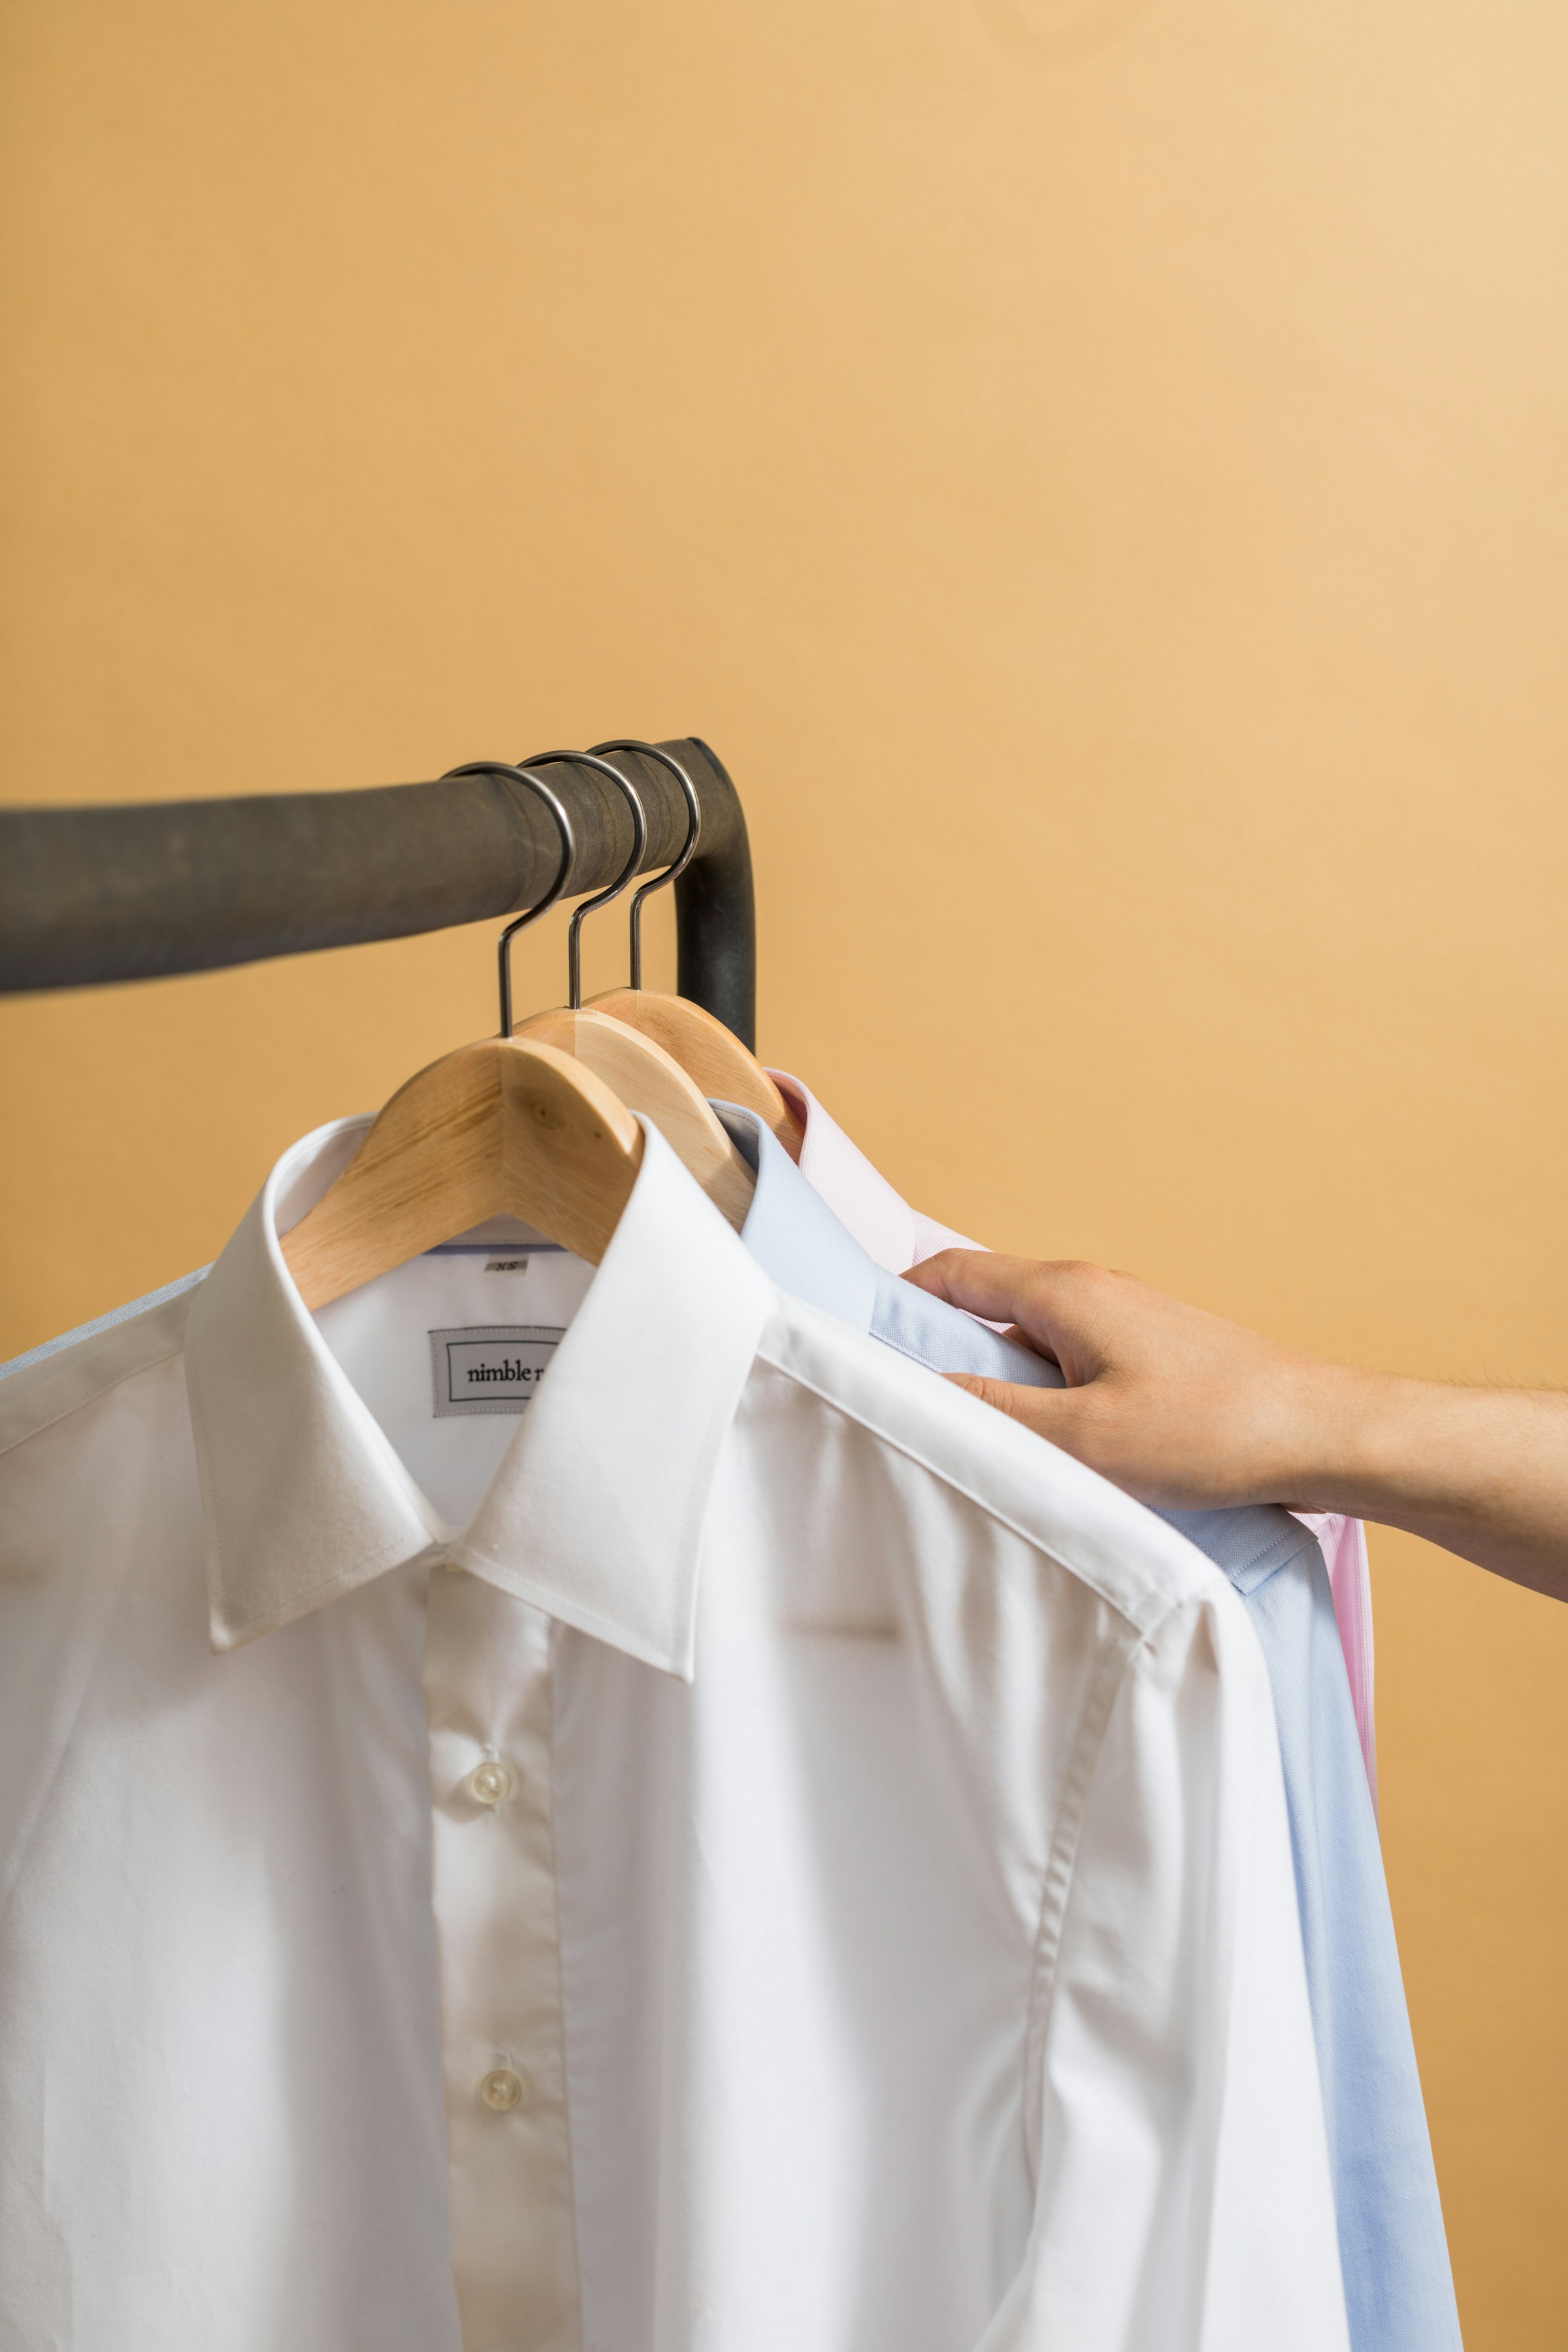 Formal shirts on hangers | Source: Unsplash